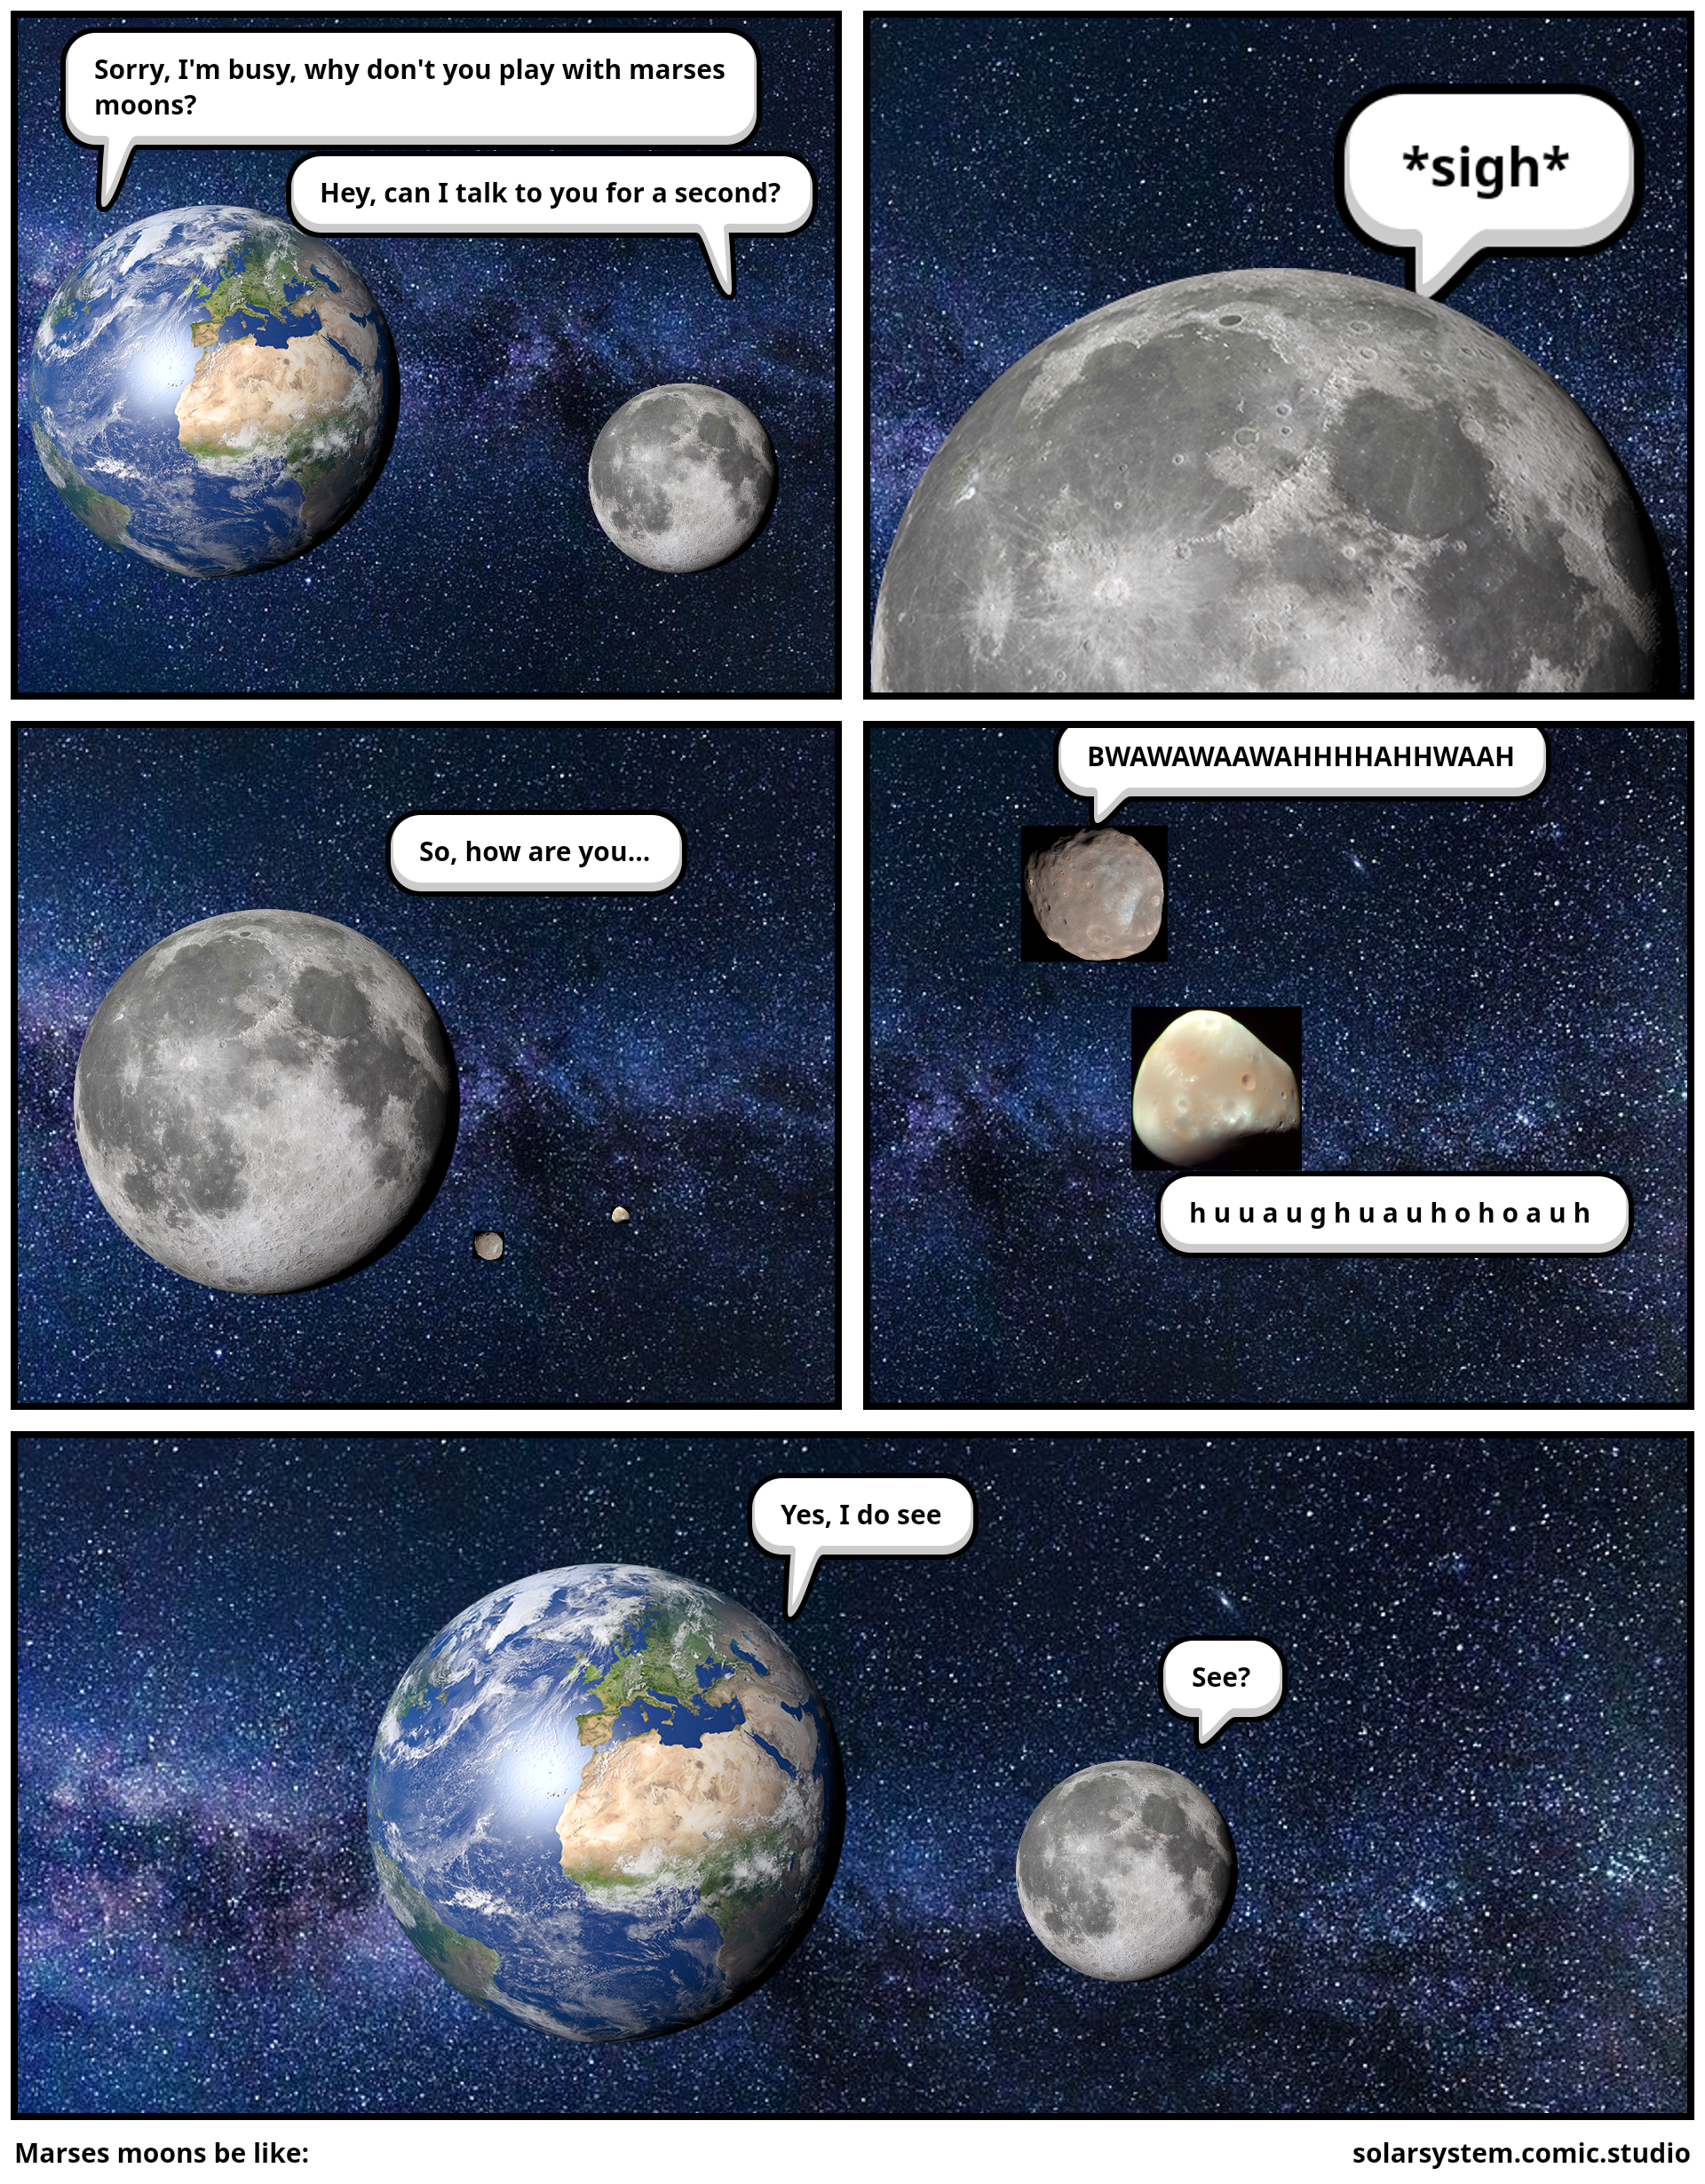 Marses moons be like: